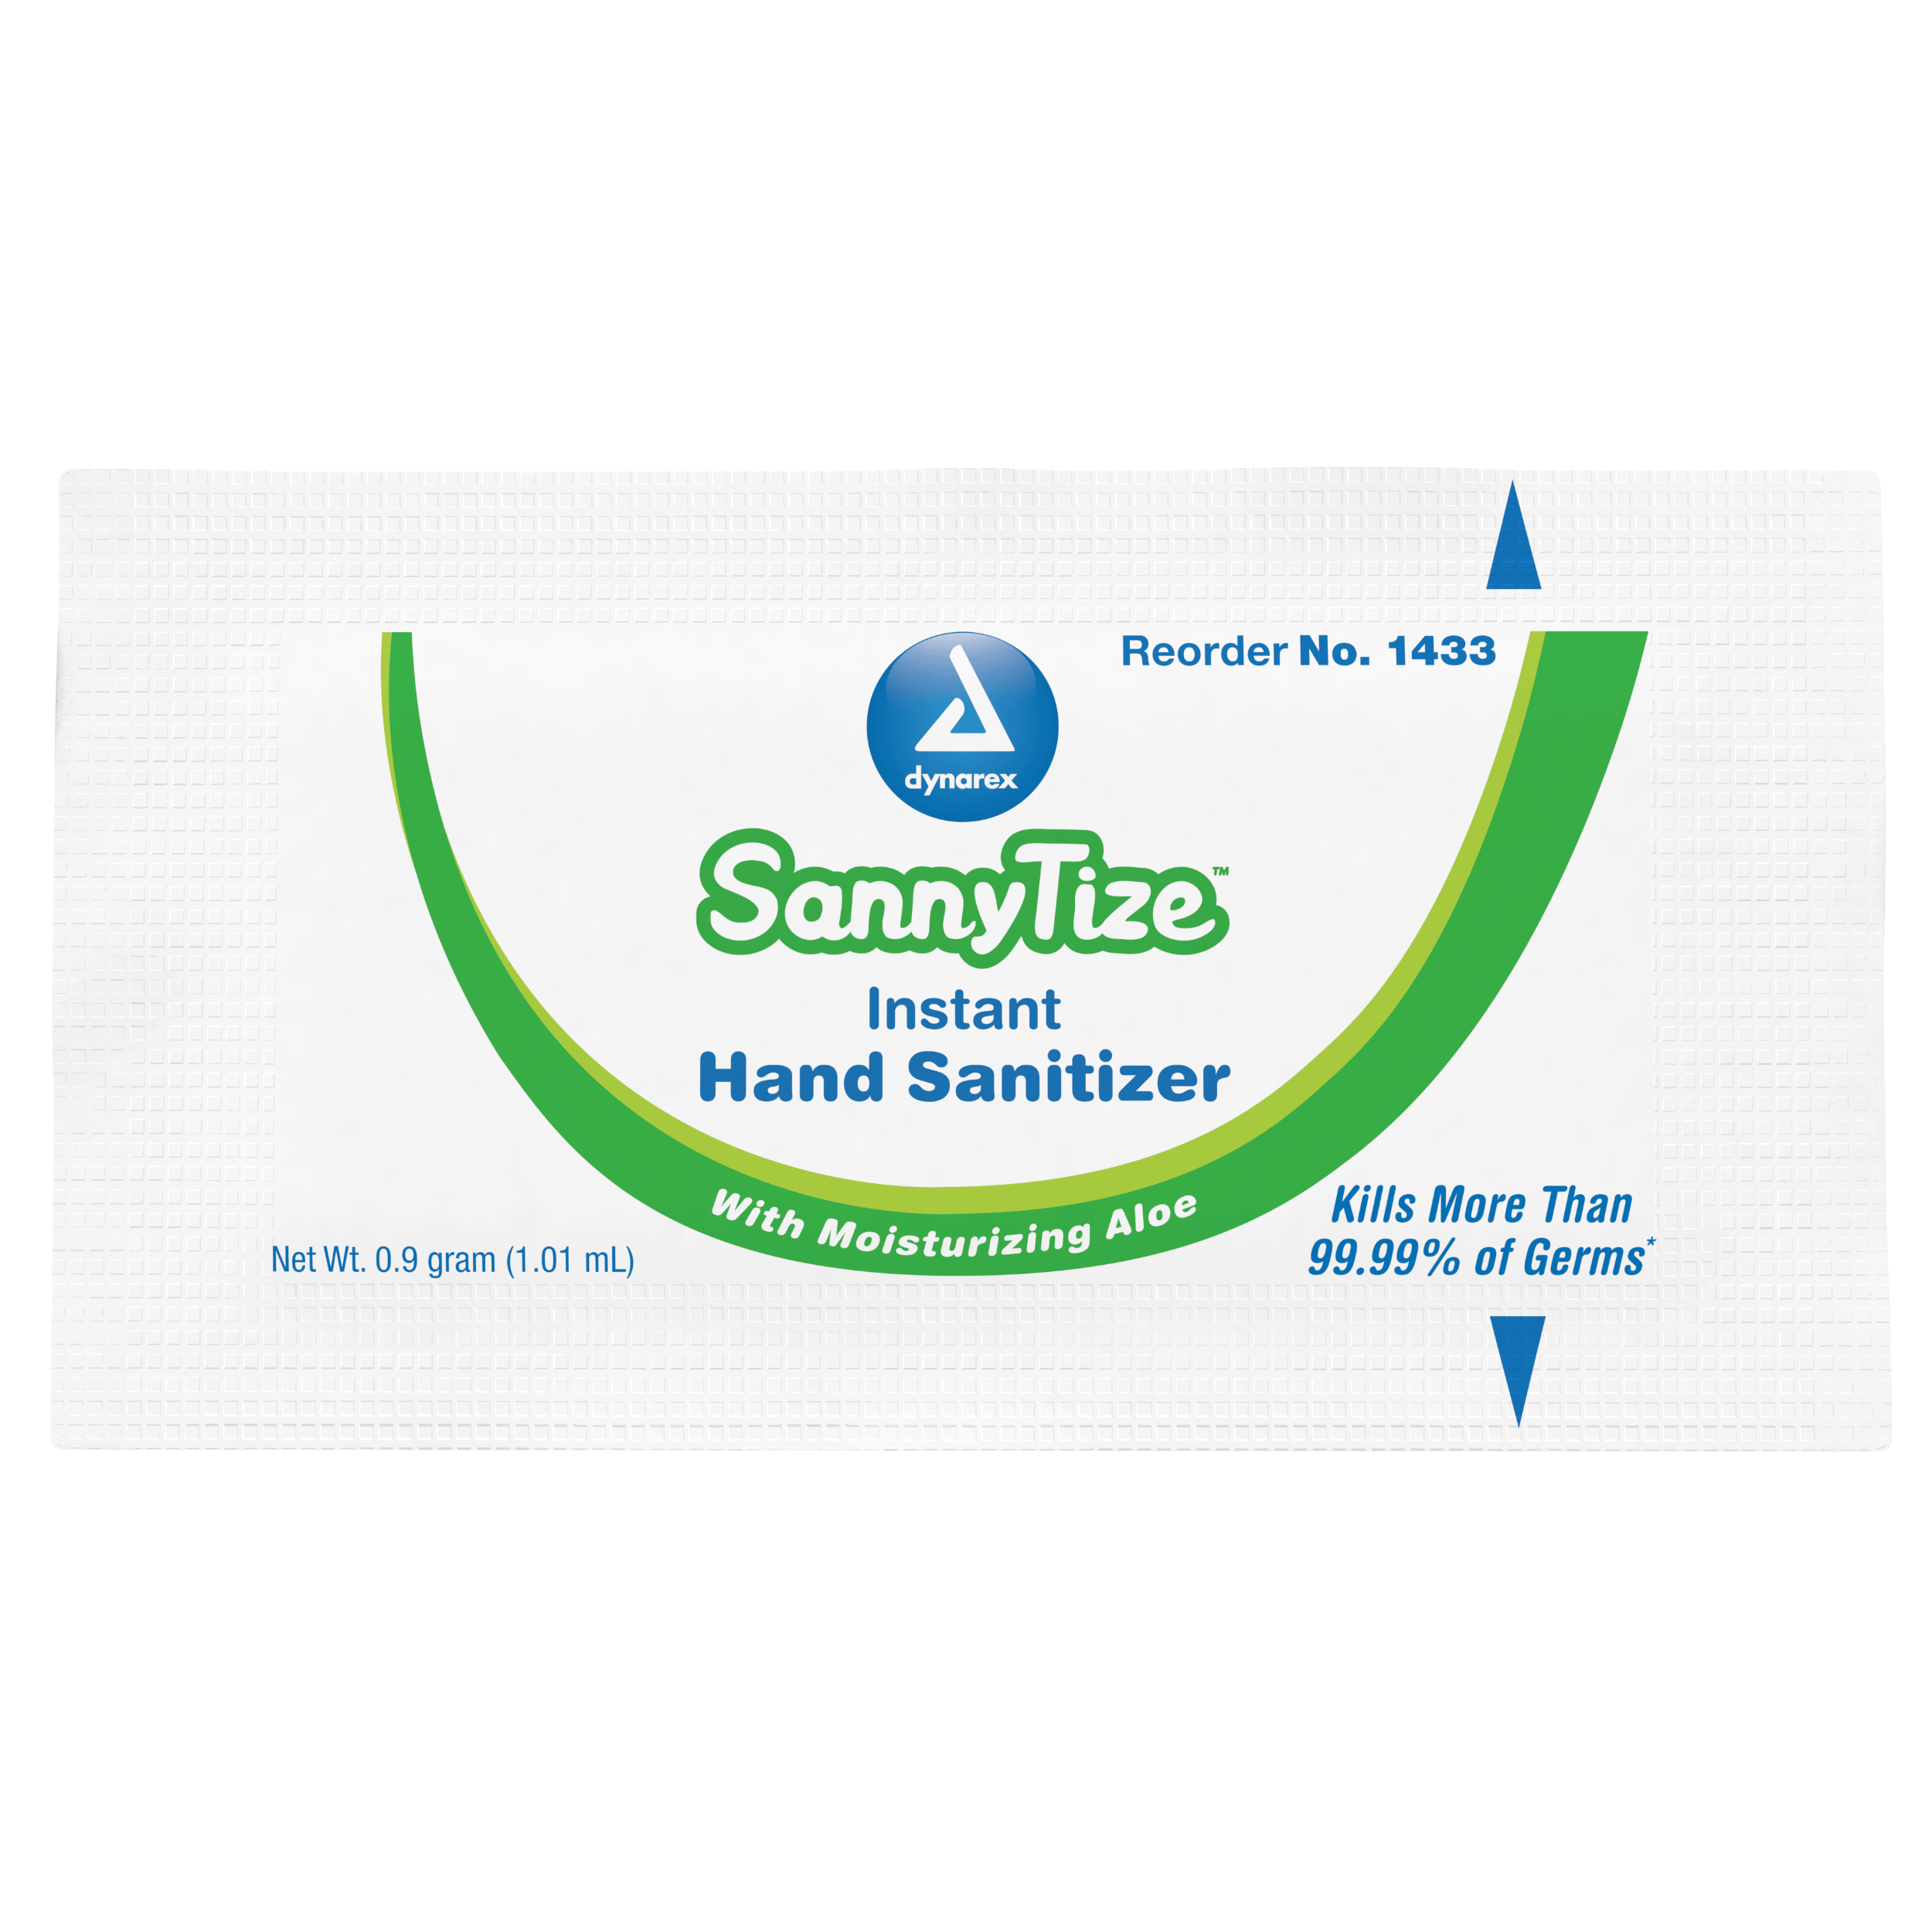 SannyTize Instant Hand Sanitizer .9g packet